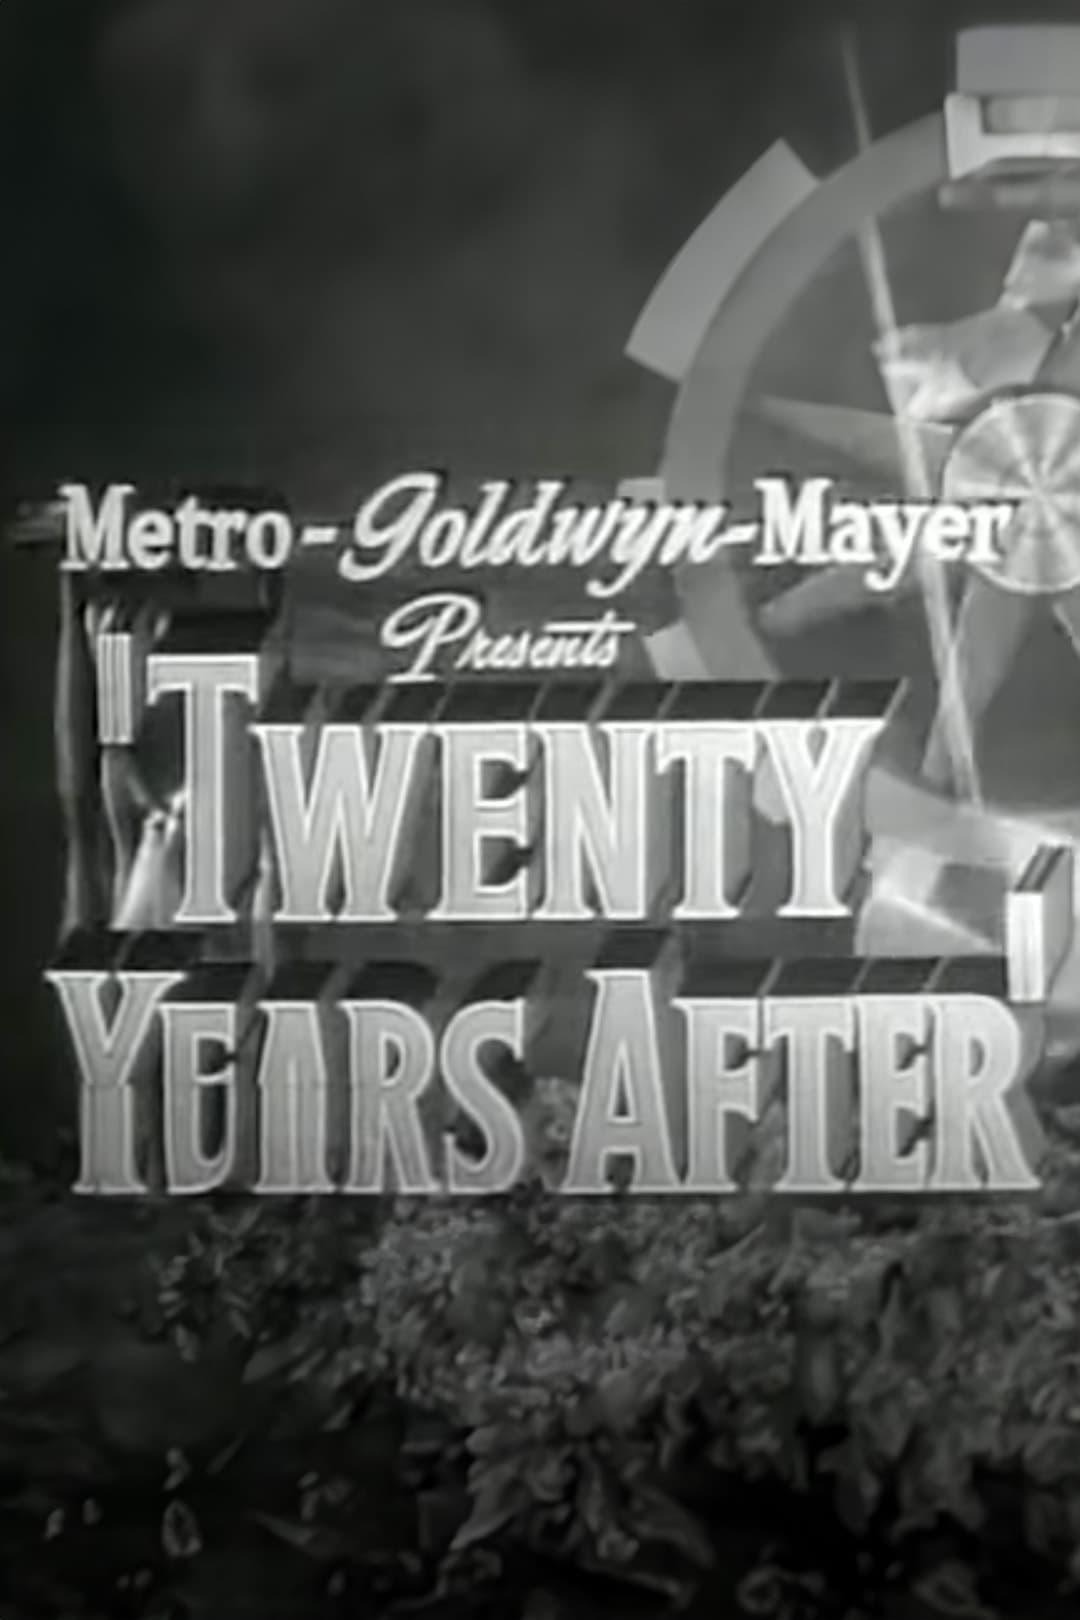 Twenty Years After (1944)